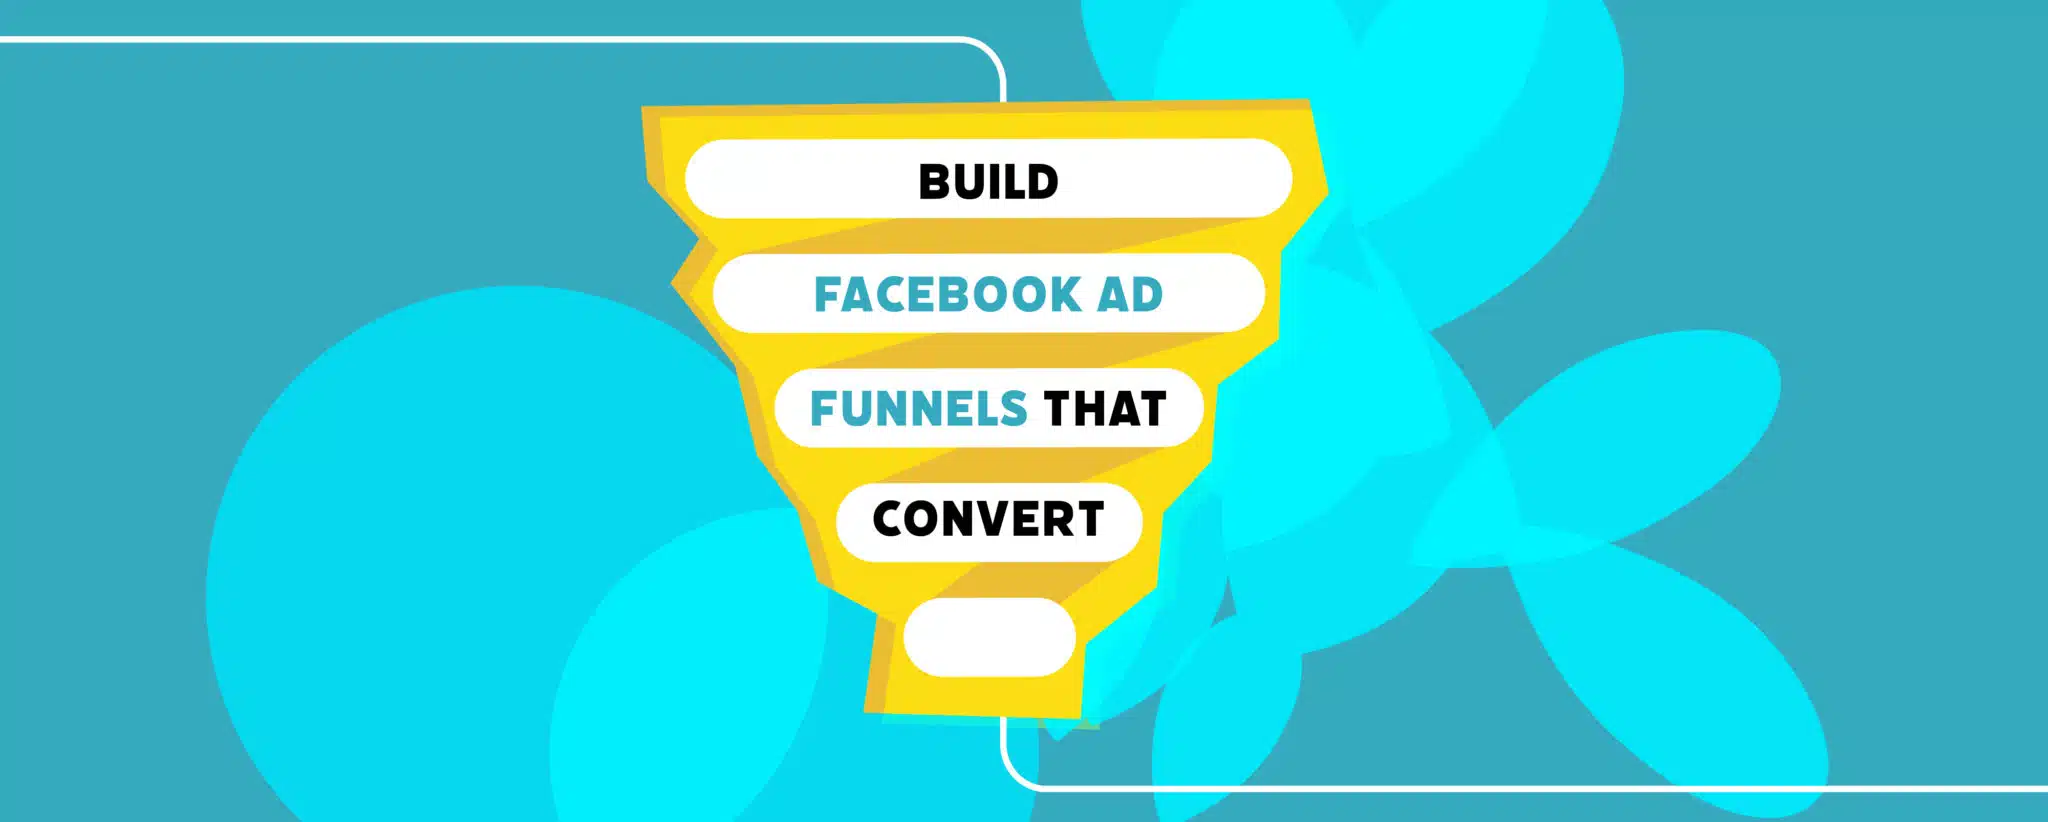 Mon 21st June Blog How To Build Facebook Ad Funnels That Convert Blog Banner